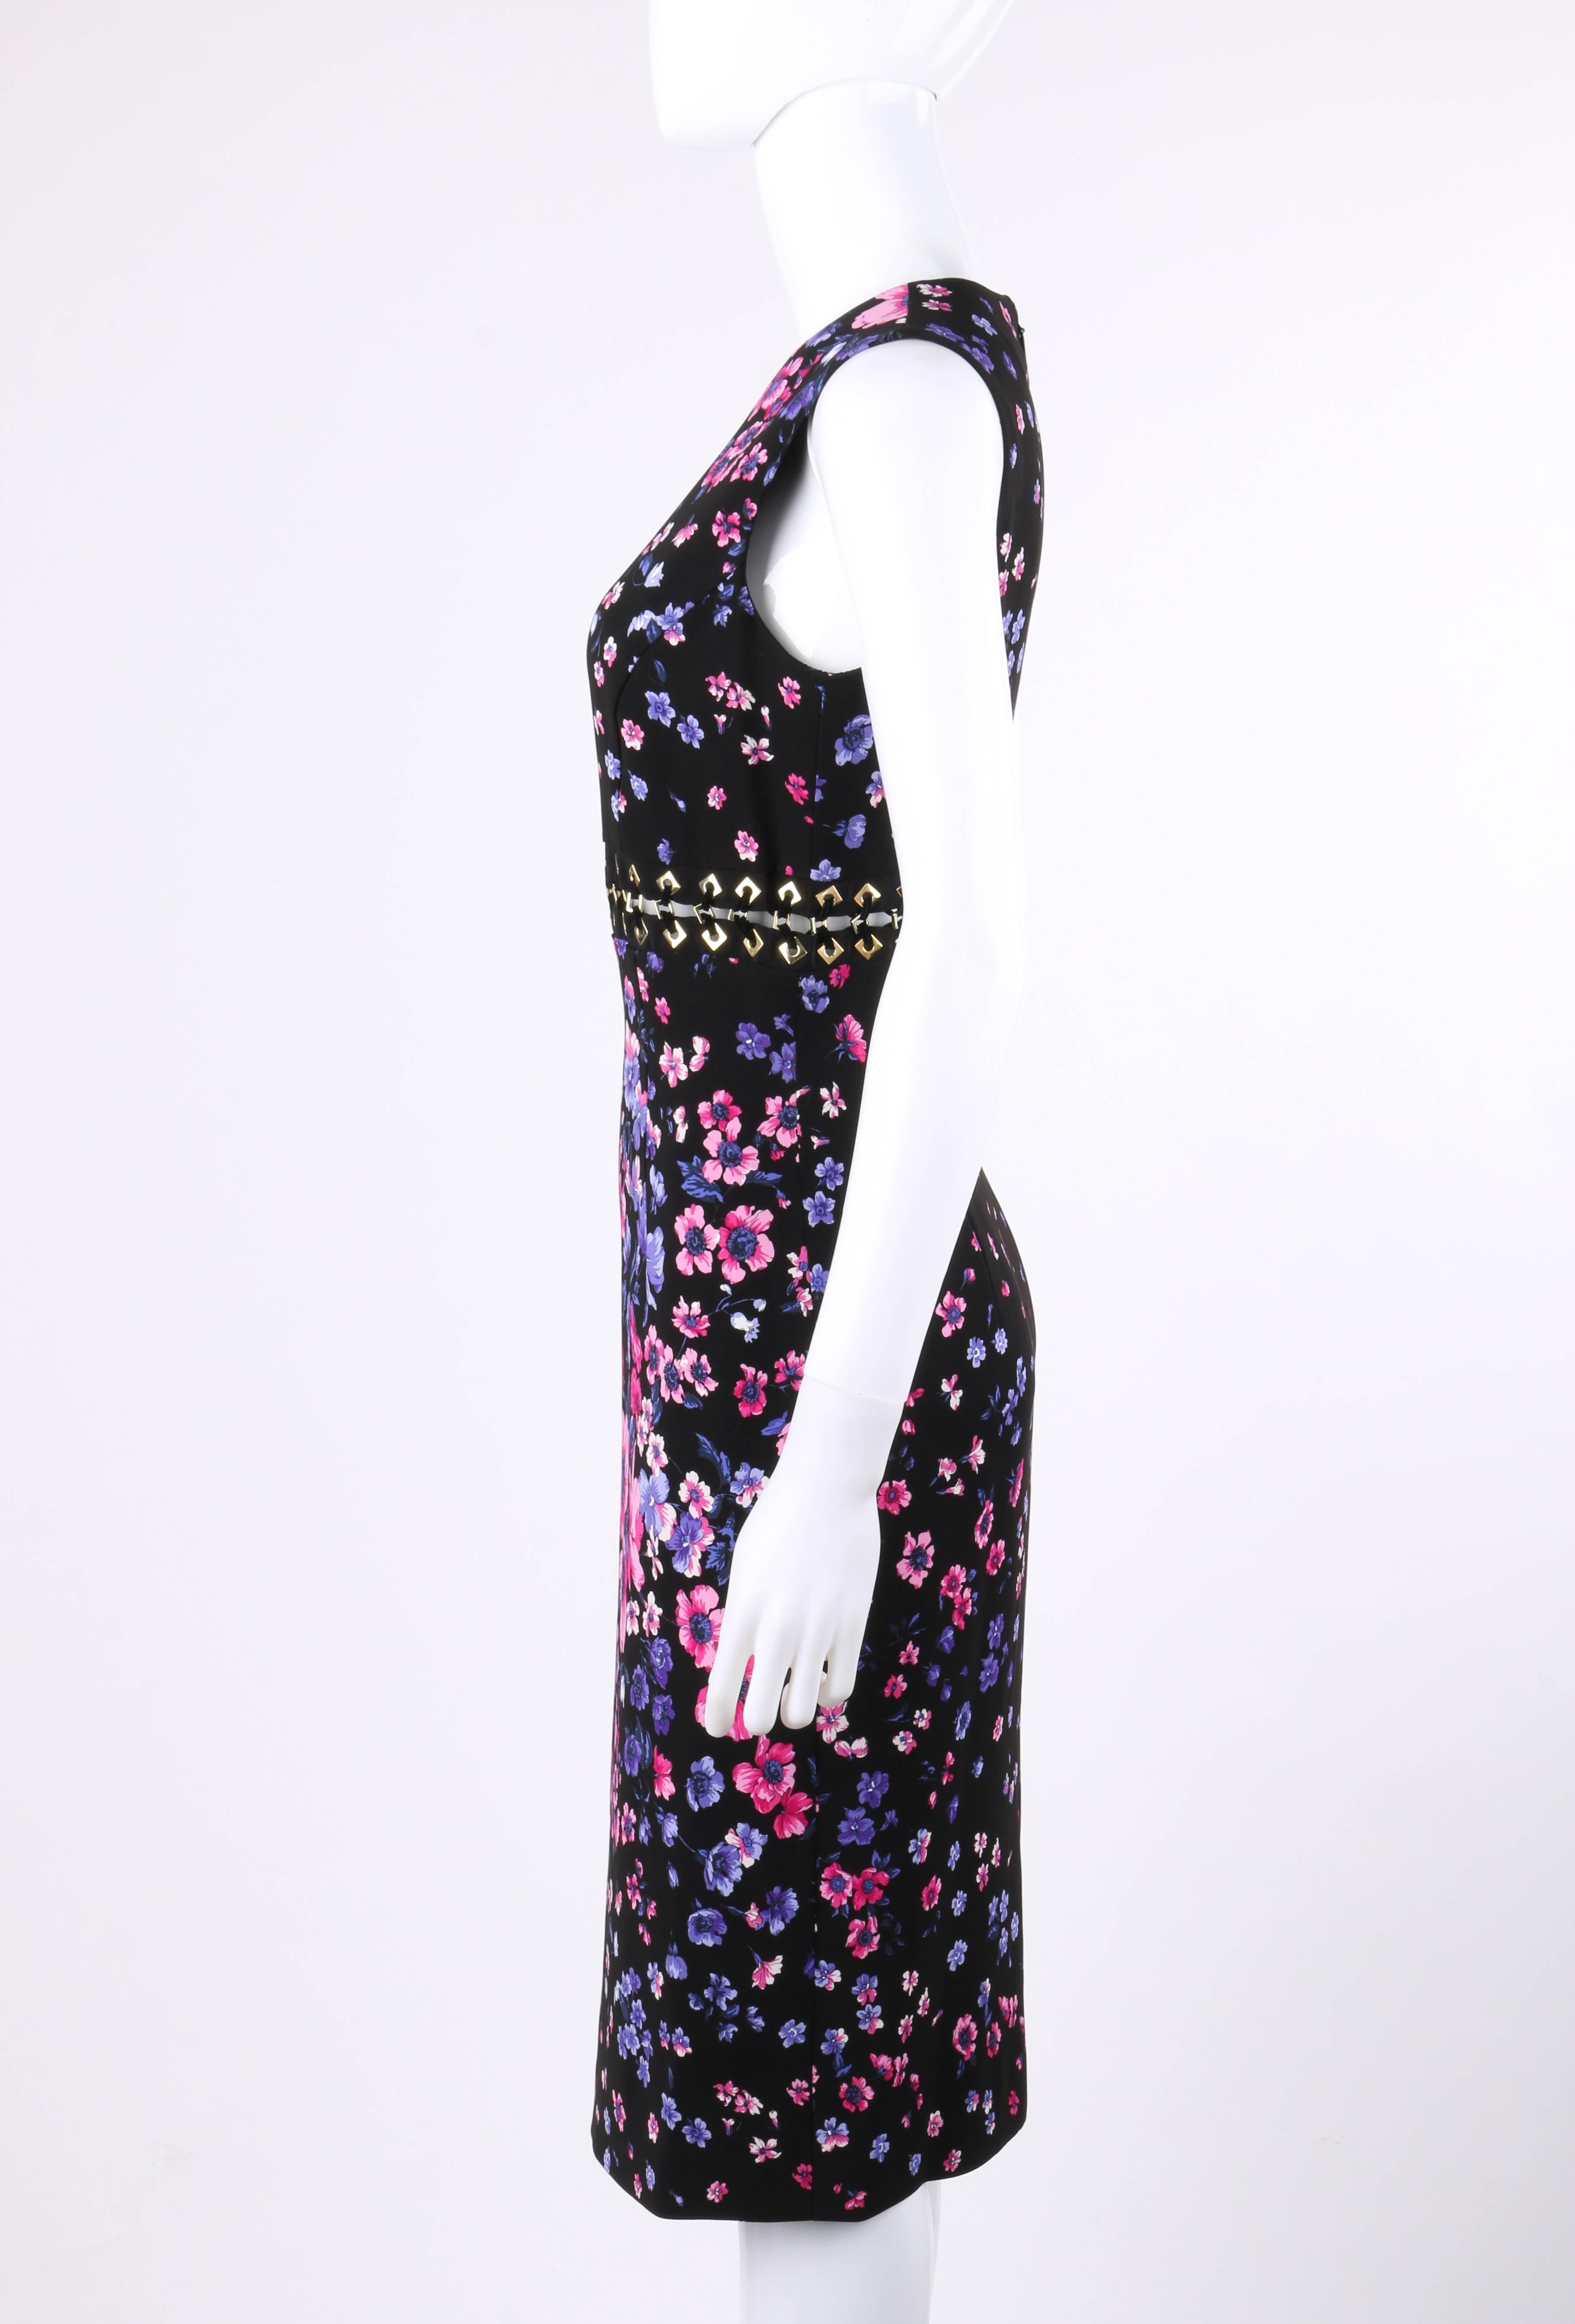 VERSACE S/S 2012 Black Multicolor Floral Print Shift Cocktail Dress NWT For Sale 1